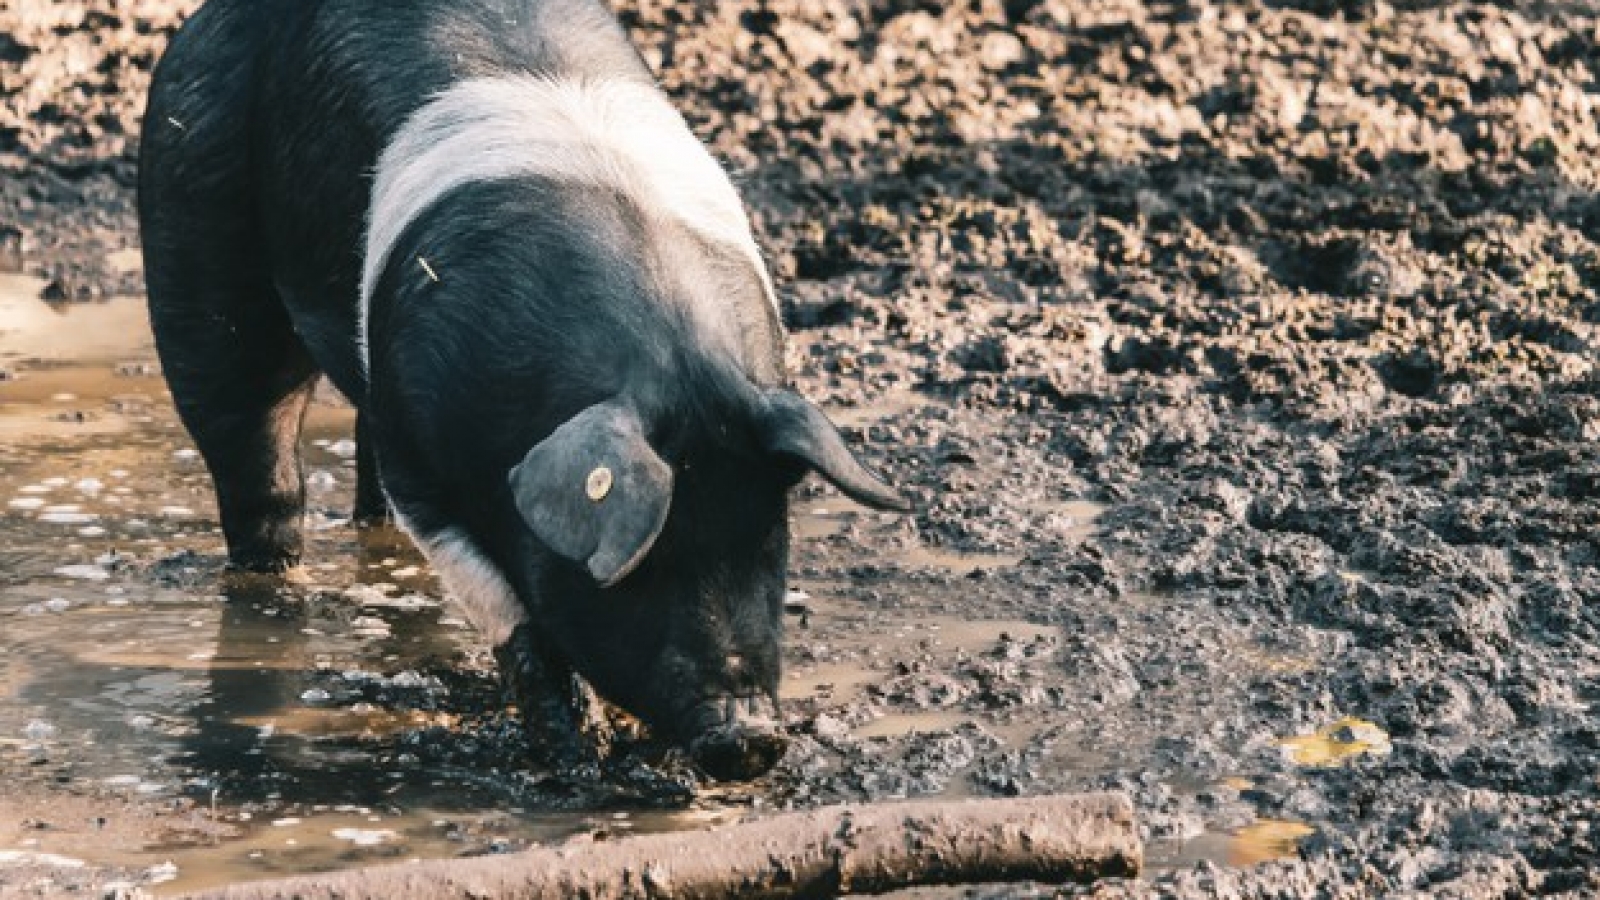 farm-pig-with-visible-ear-tag-foraging-food-muddy-ground-near-log_181624-16365